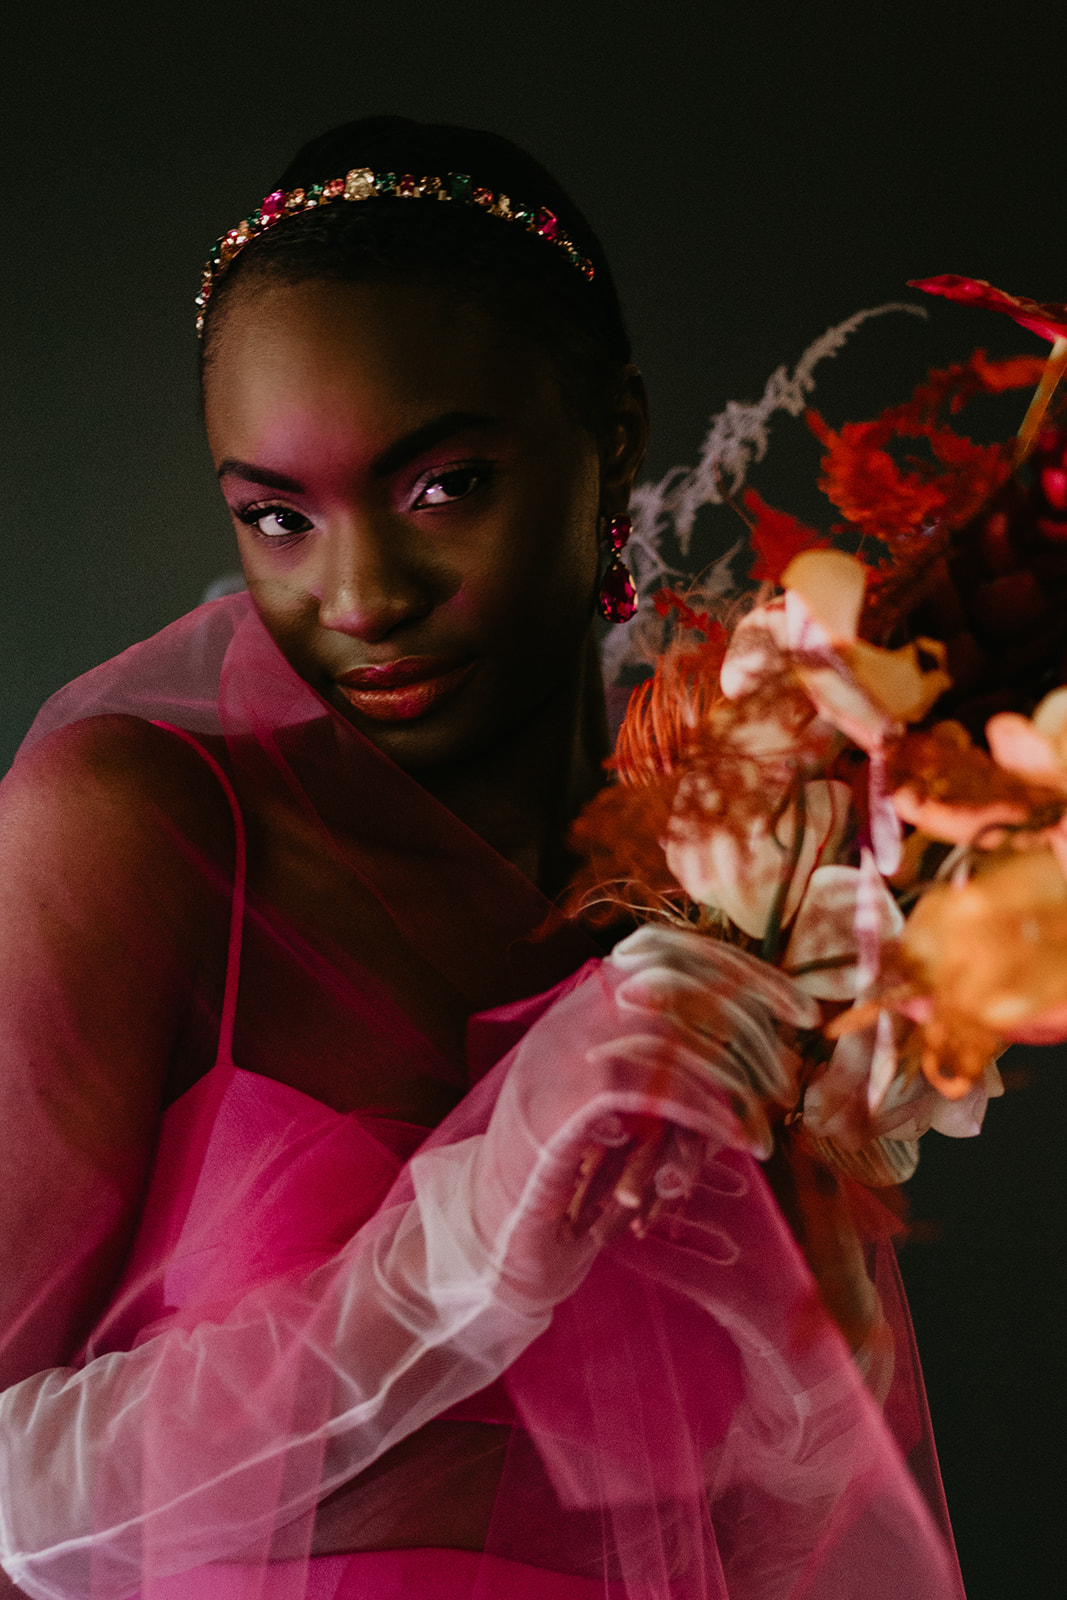 fuchsia fashion editorial featured on Brontë Bride - hot pink inspiration